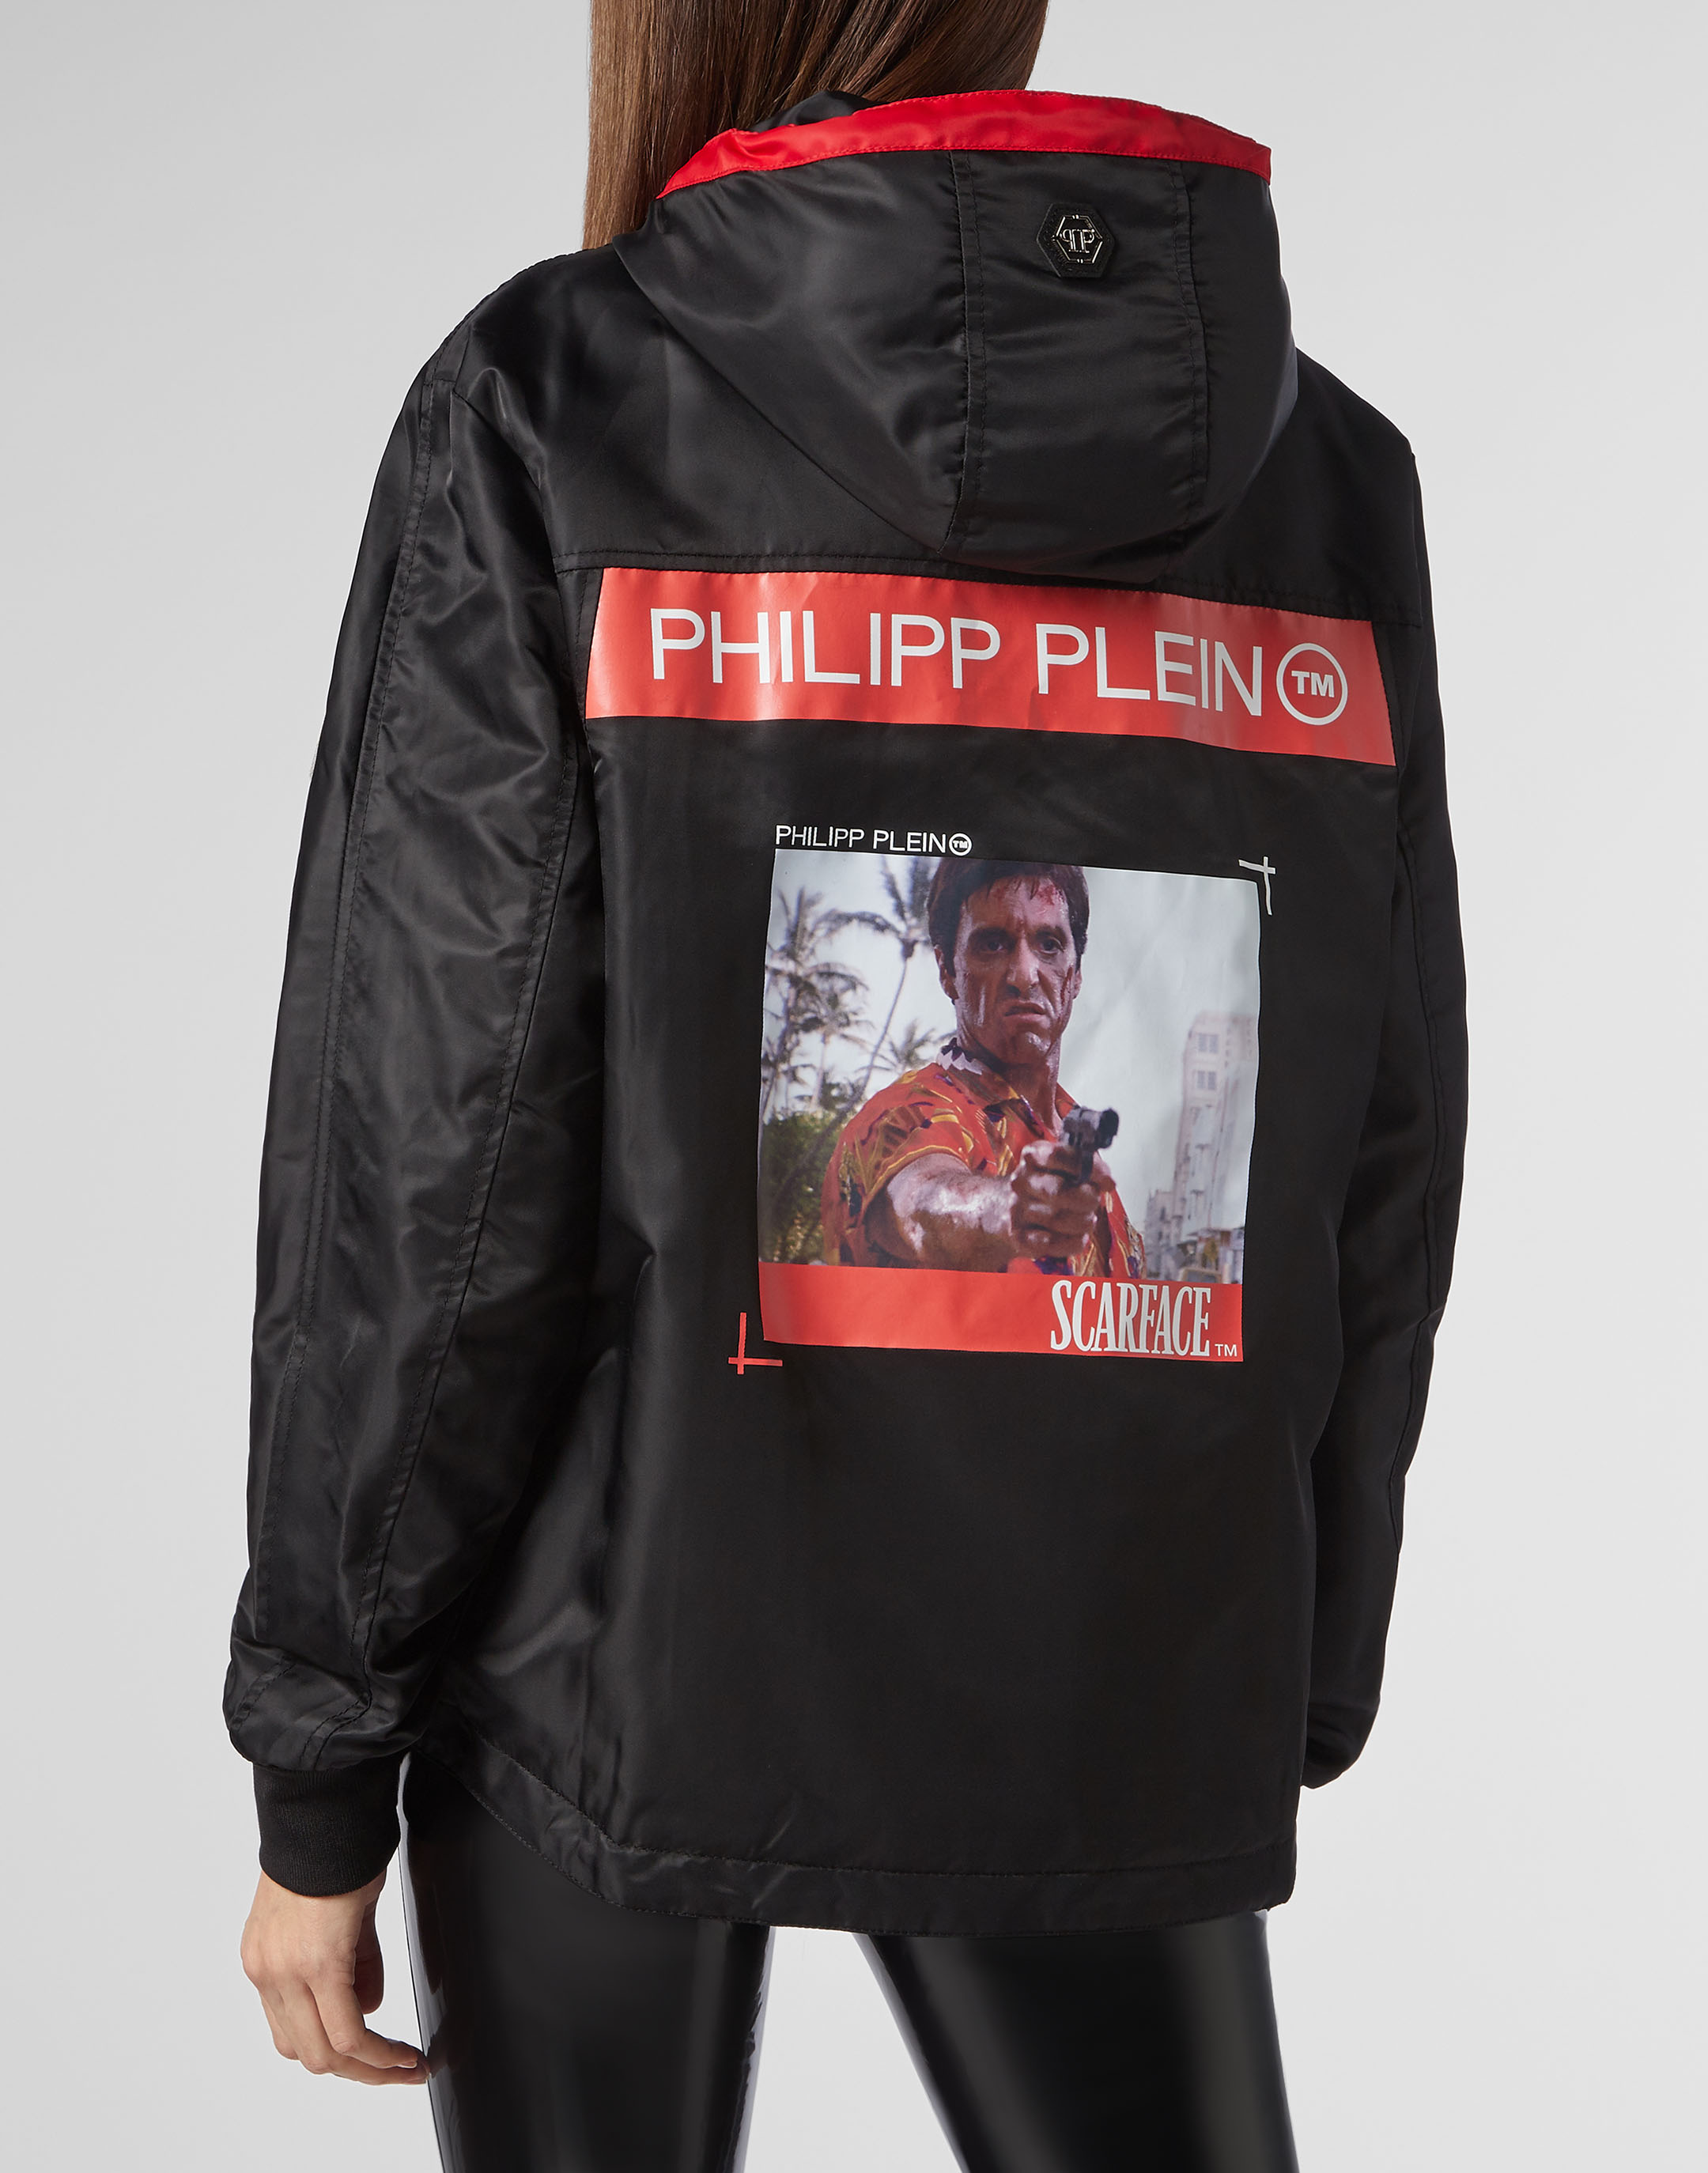 philipp plein scarface hoodie